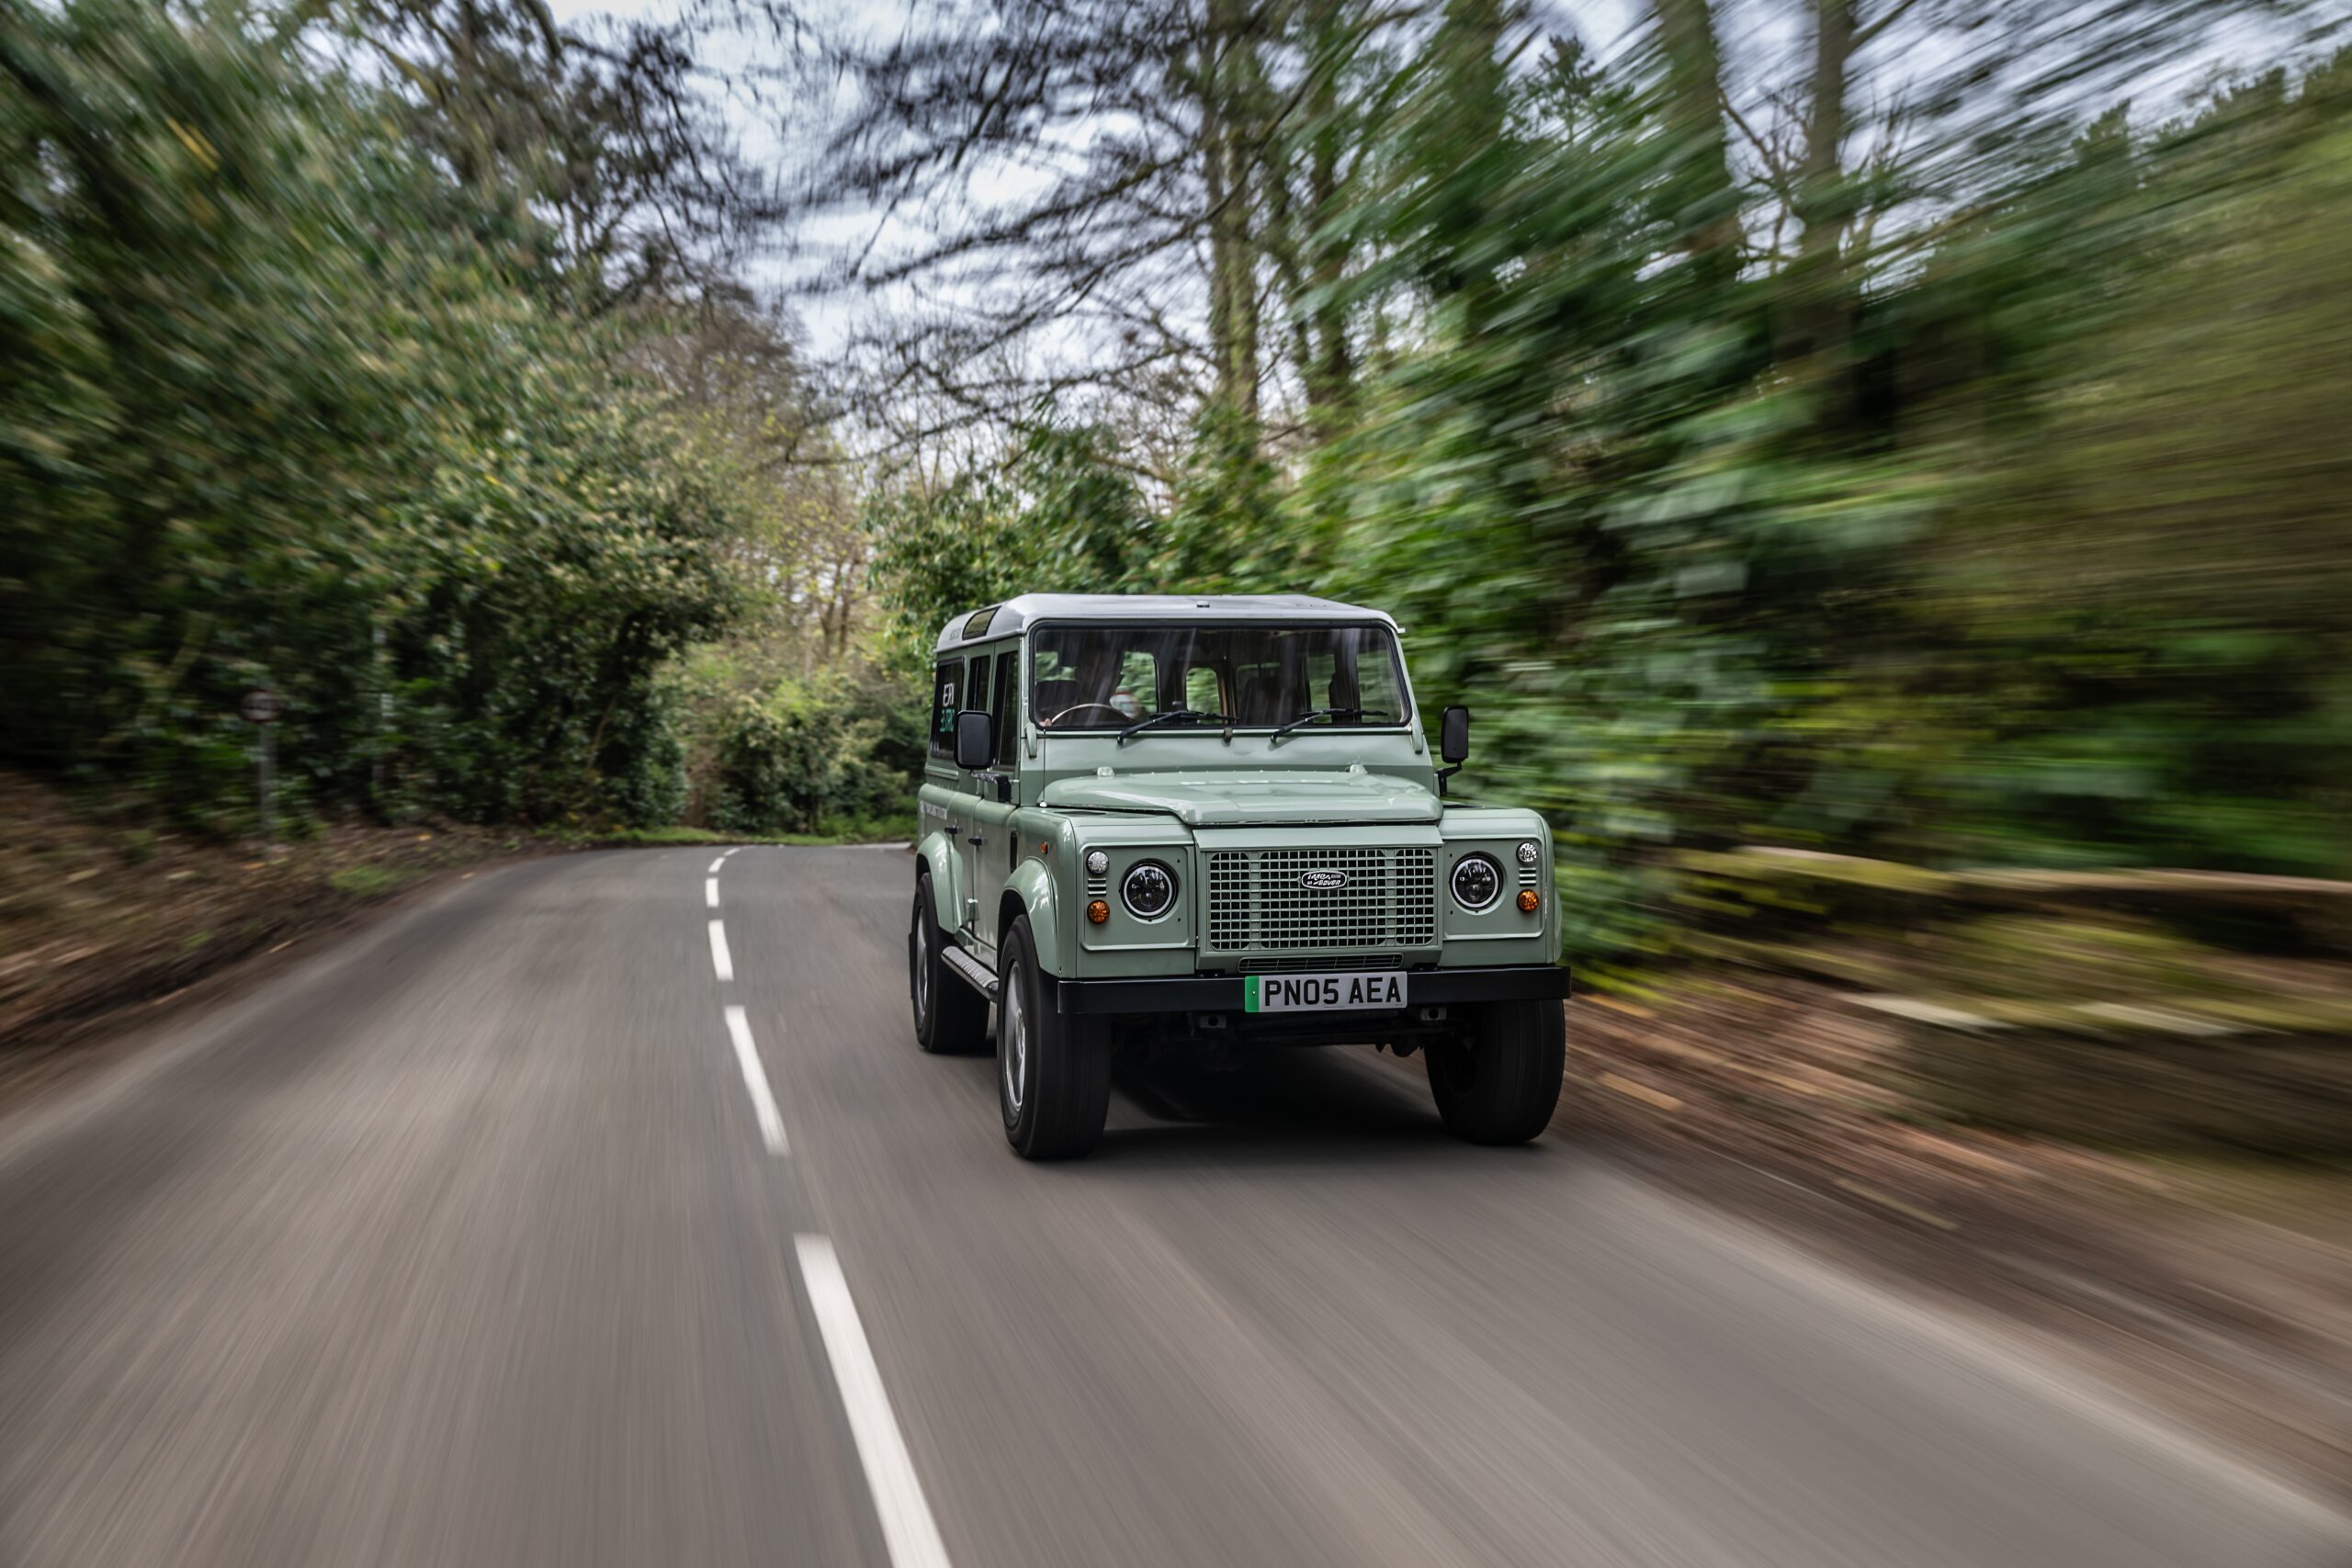 The BEDEO retrofit Land Rover Icon